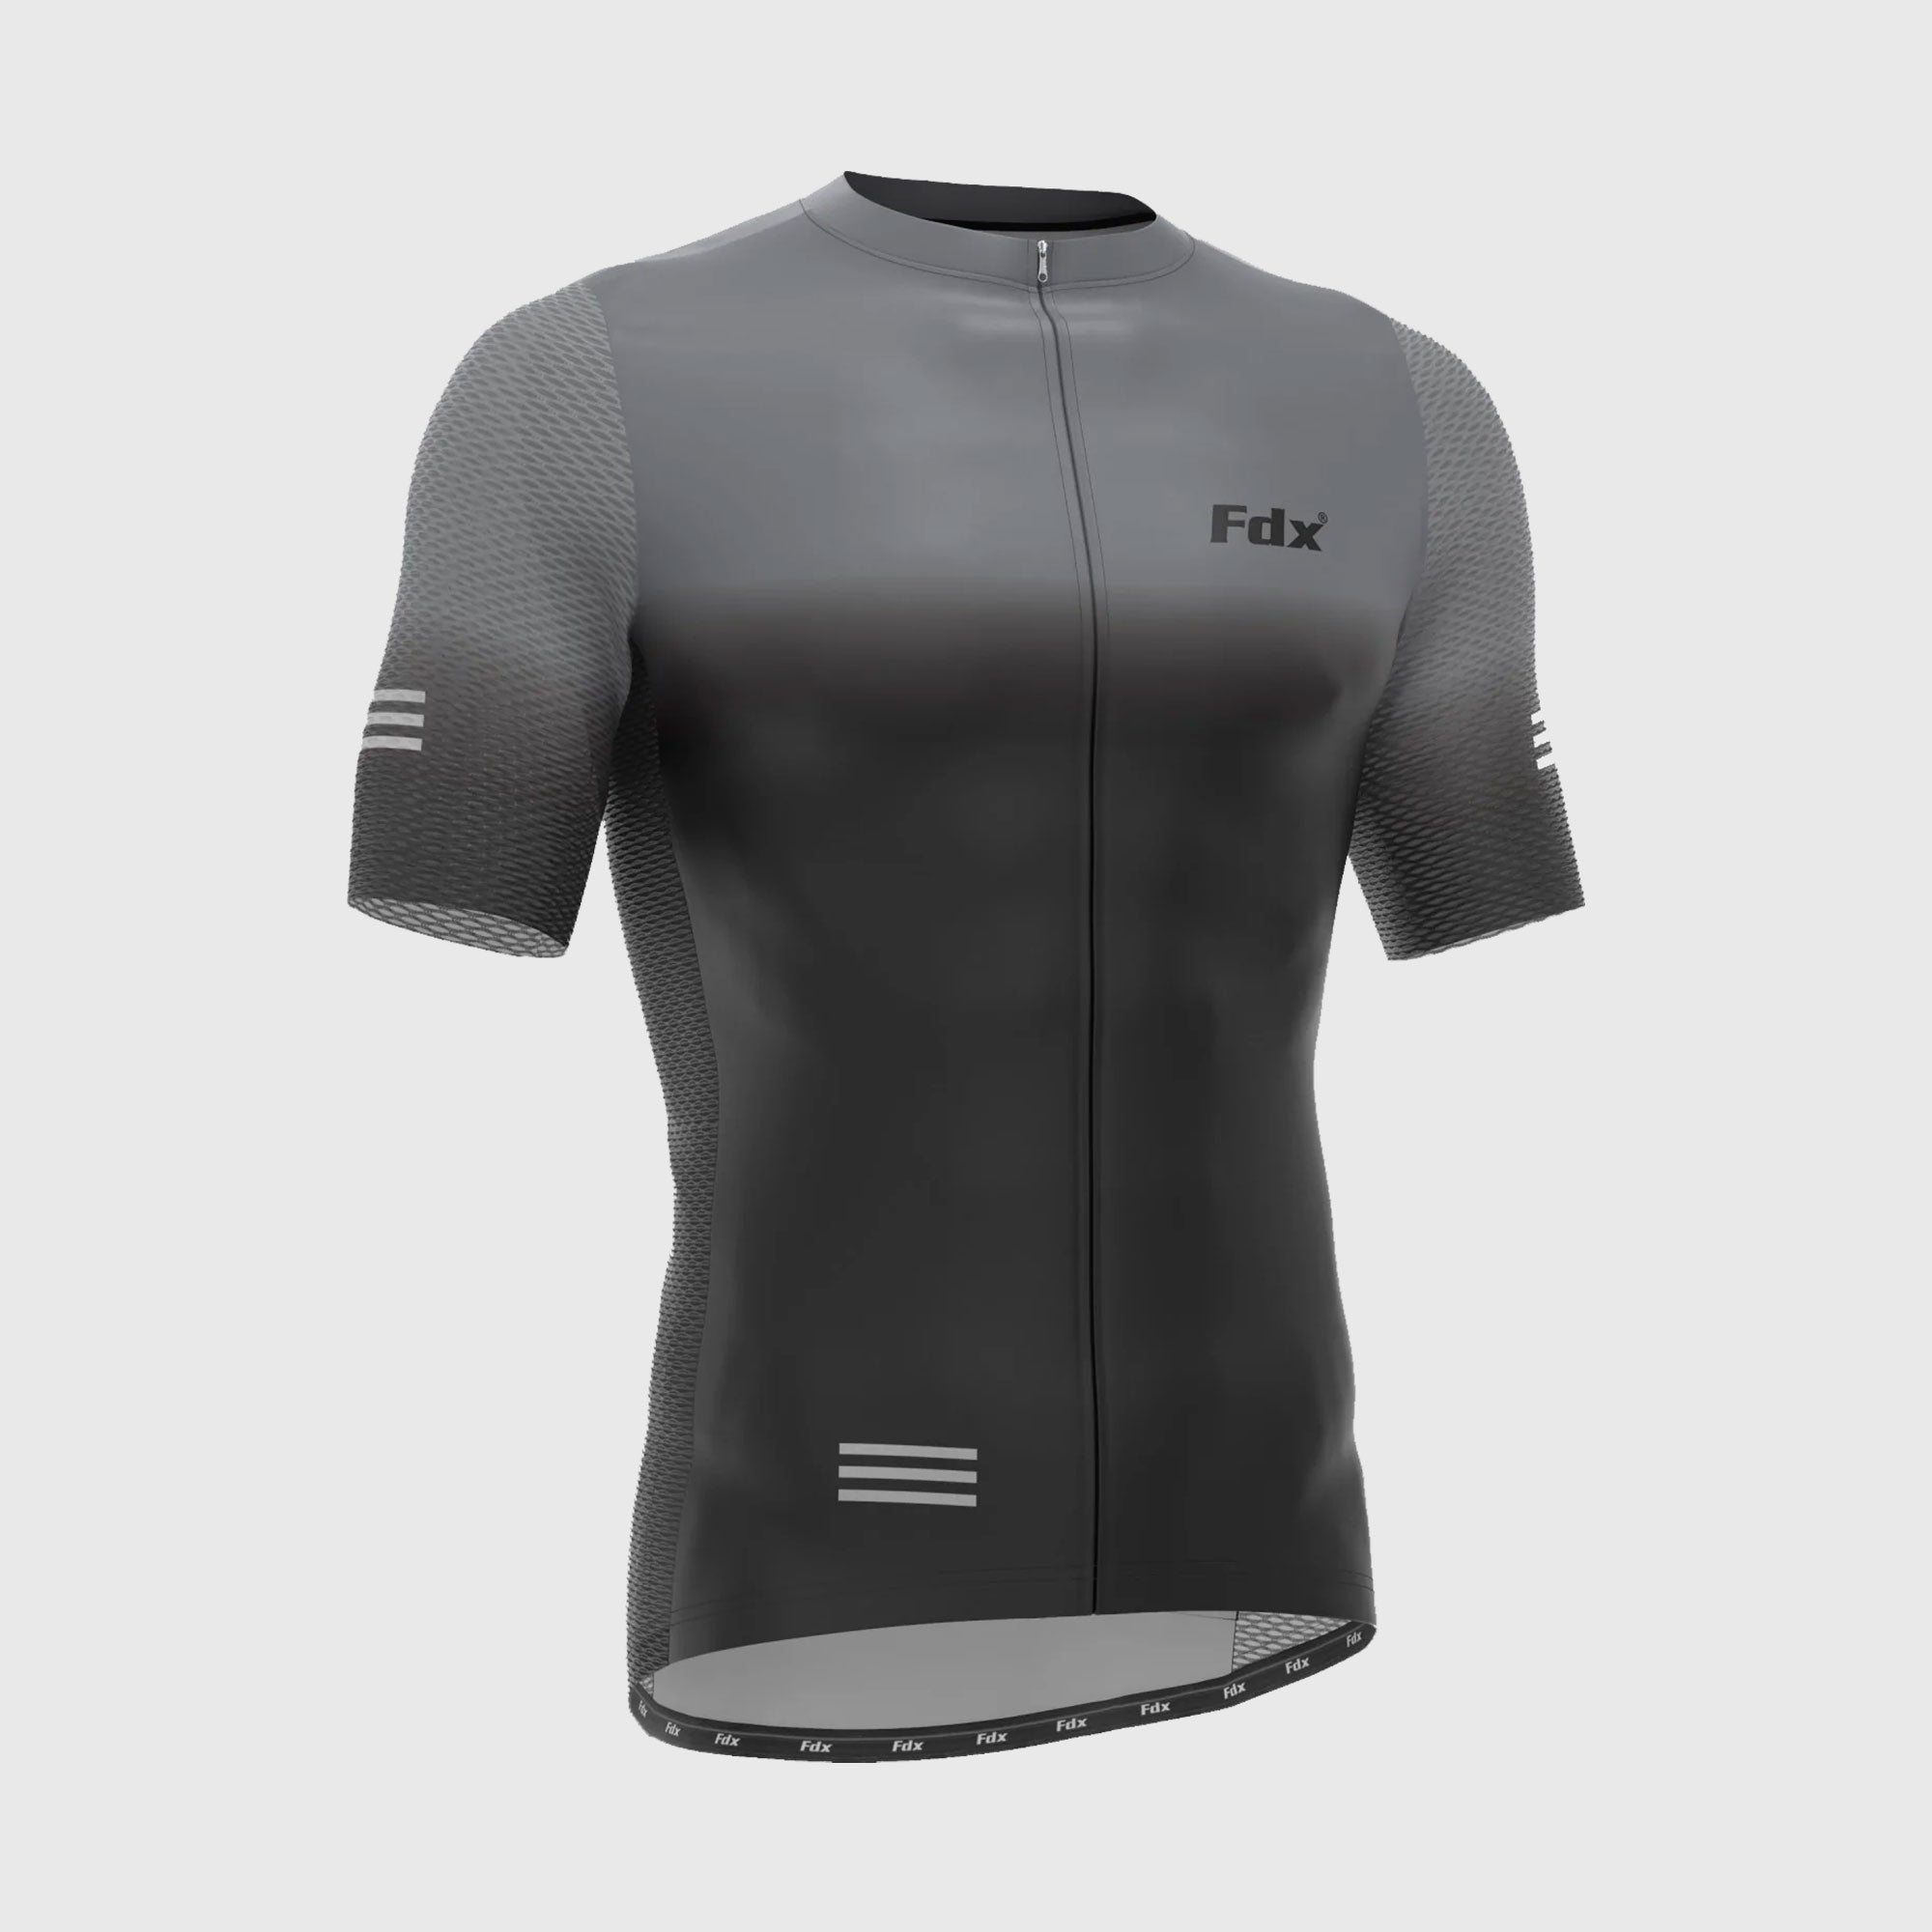 Fdx Duo Grey / Black Men's Short Sleeve Summer Cycling Jersey